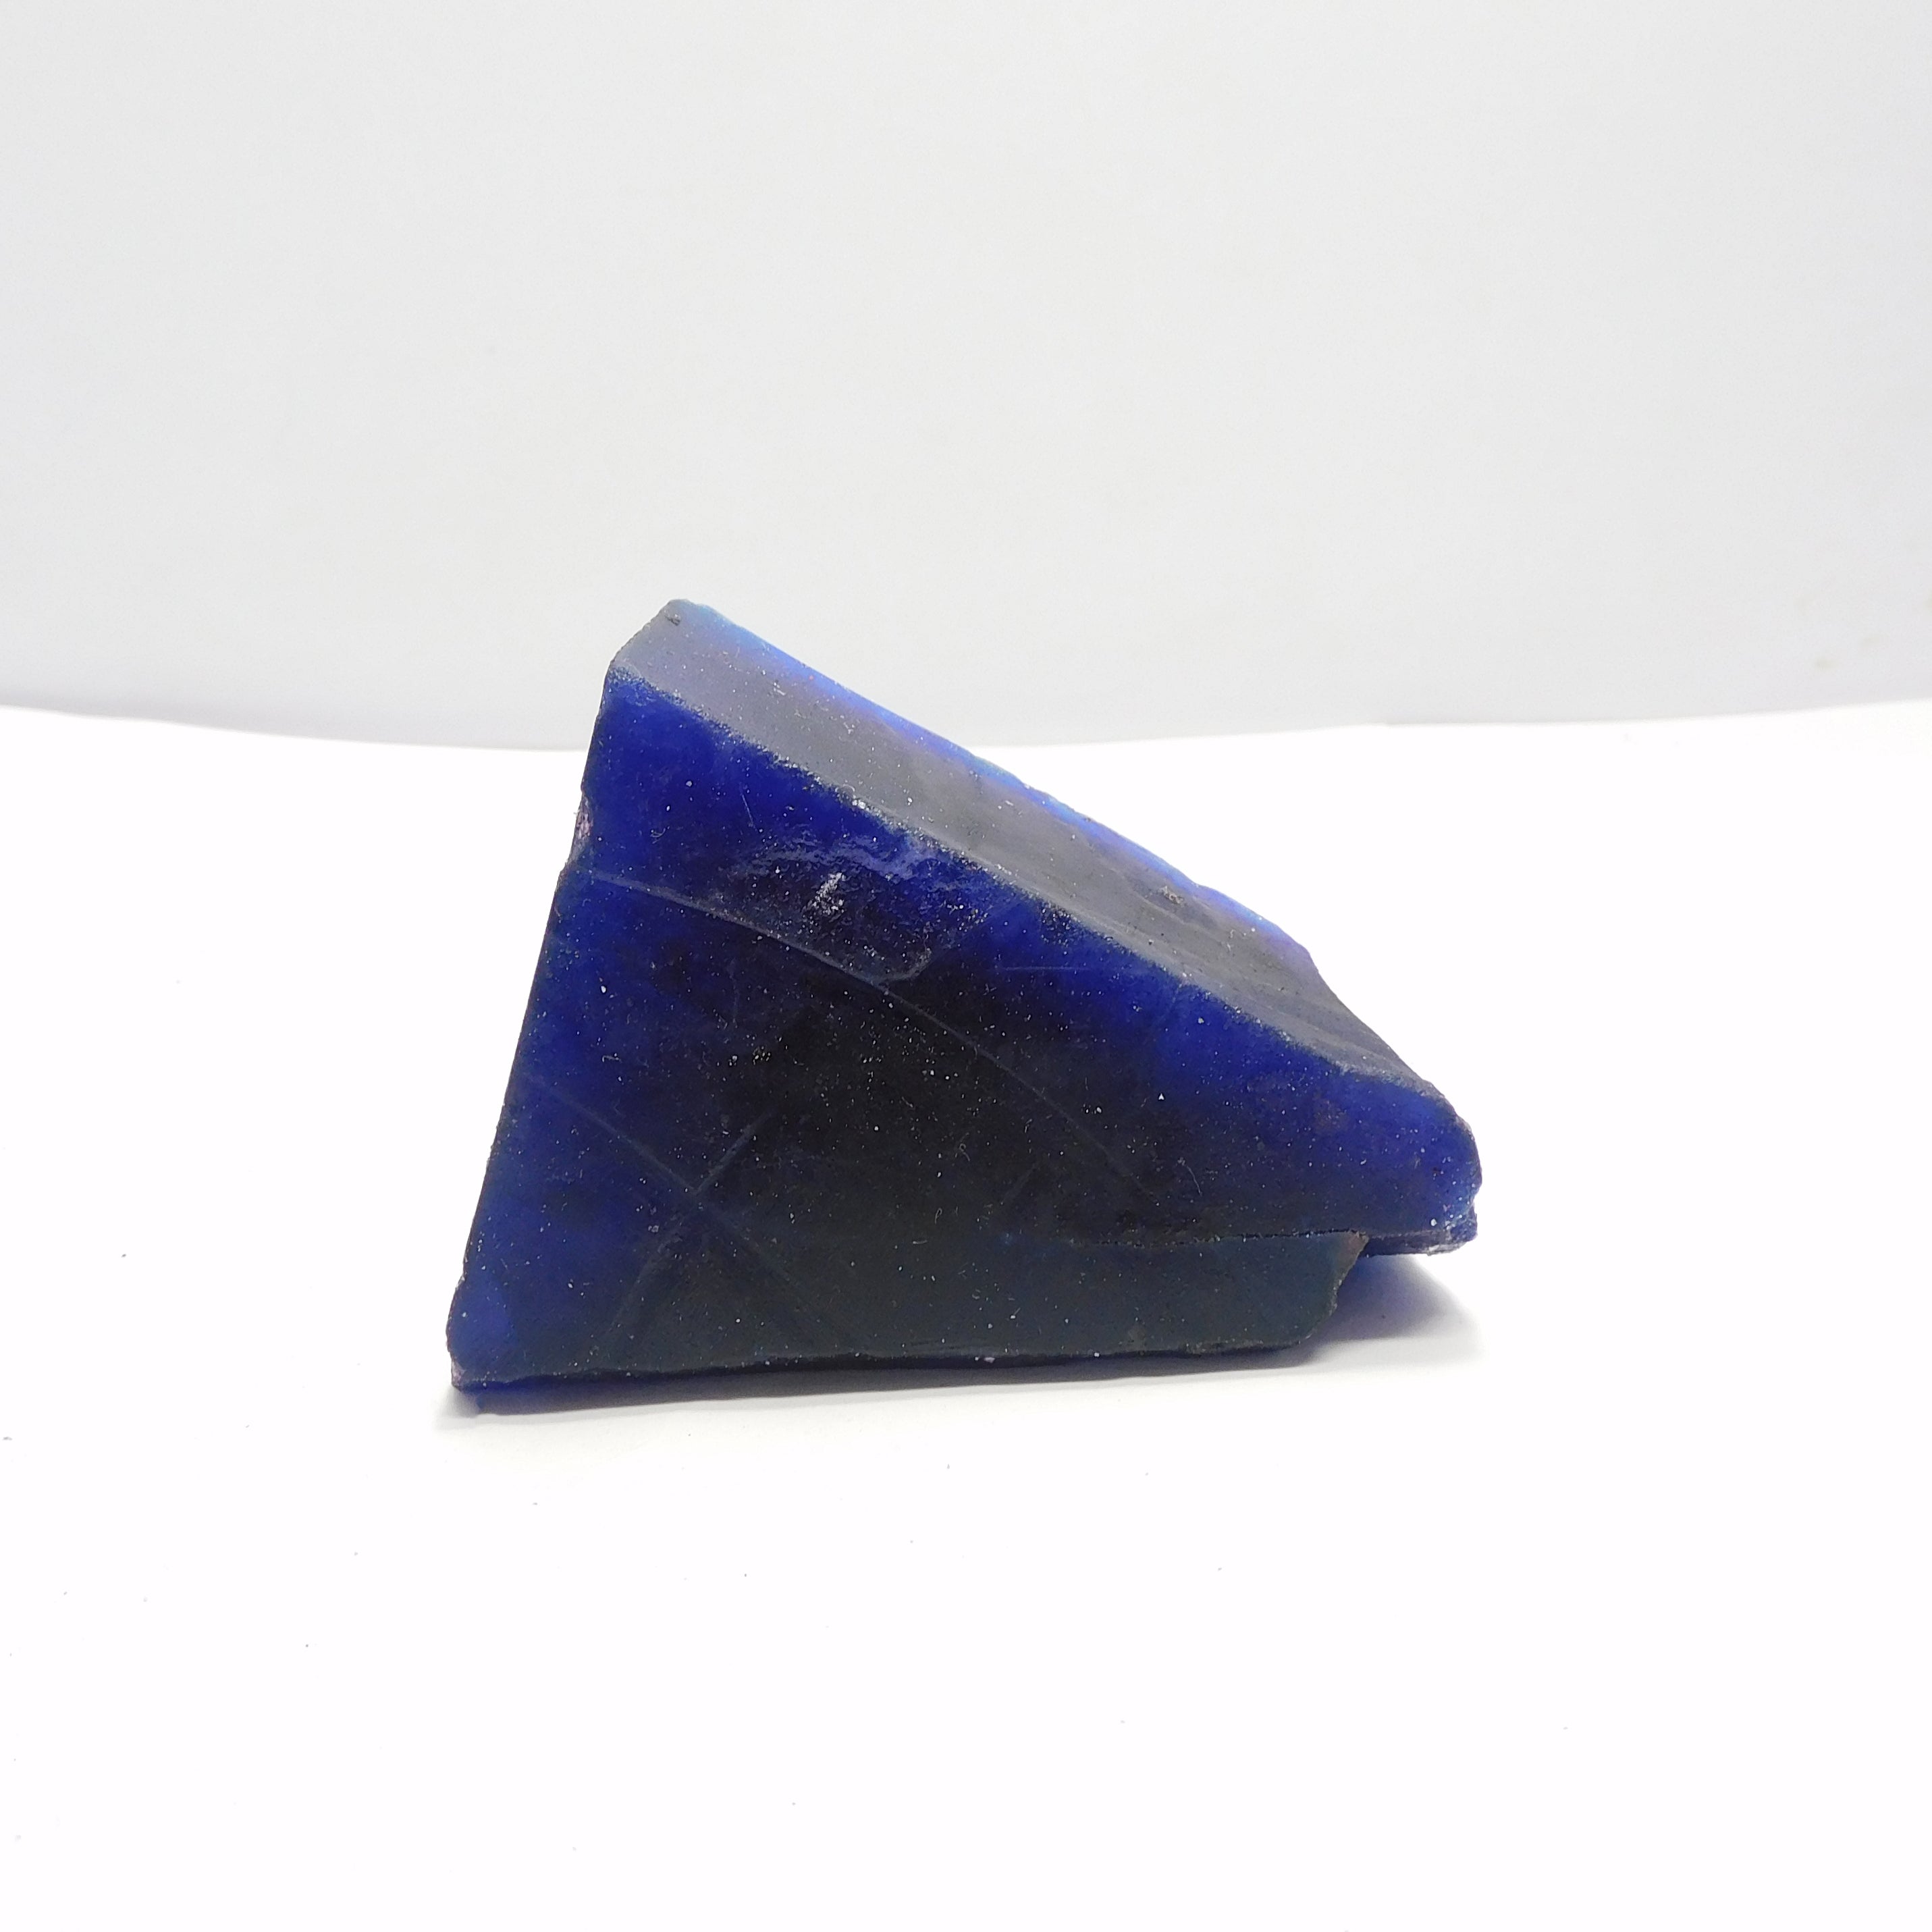 Blue Huge Size Rough 541 Carat Natural Blue Tanzanite Loose Gemstone CERTIFIED Uncut Raw Rough | Best Price | On Sale